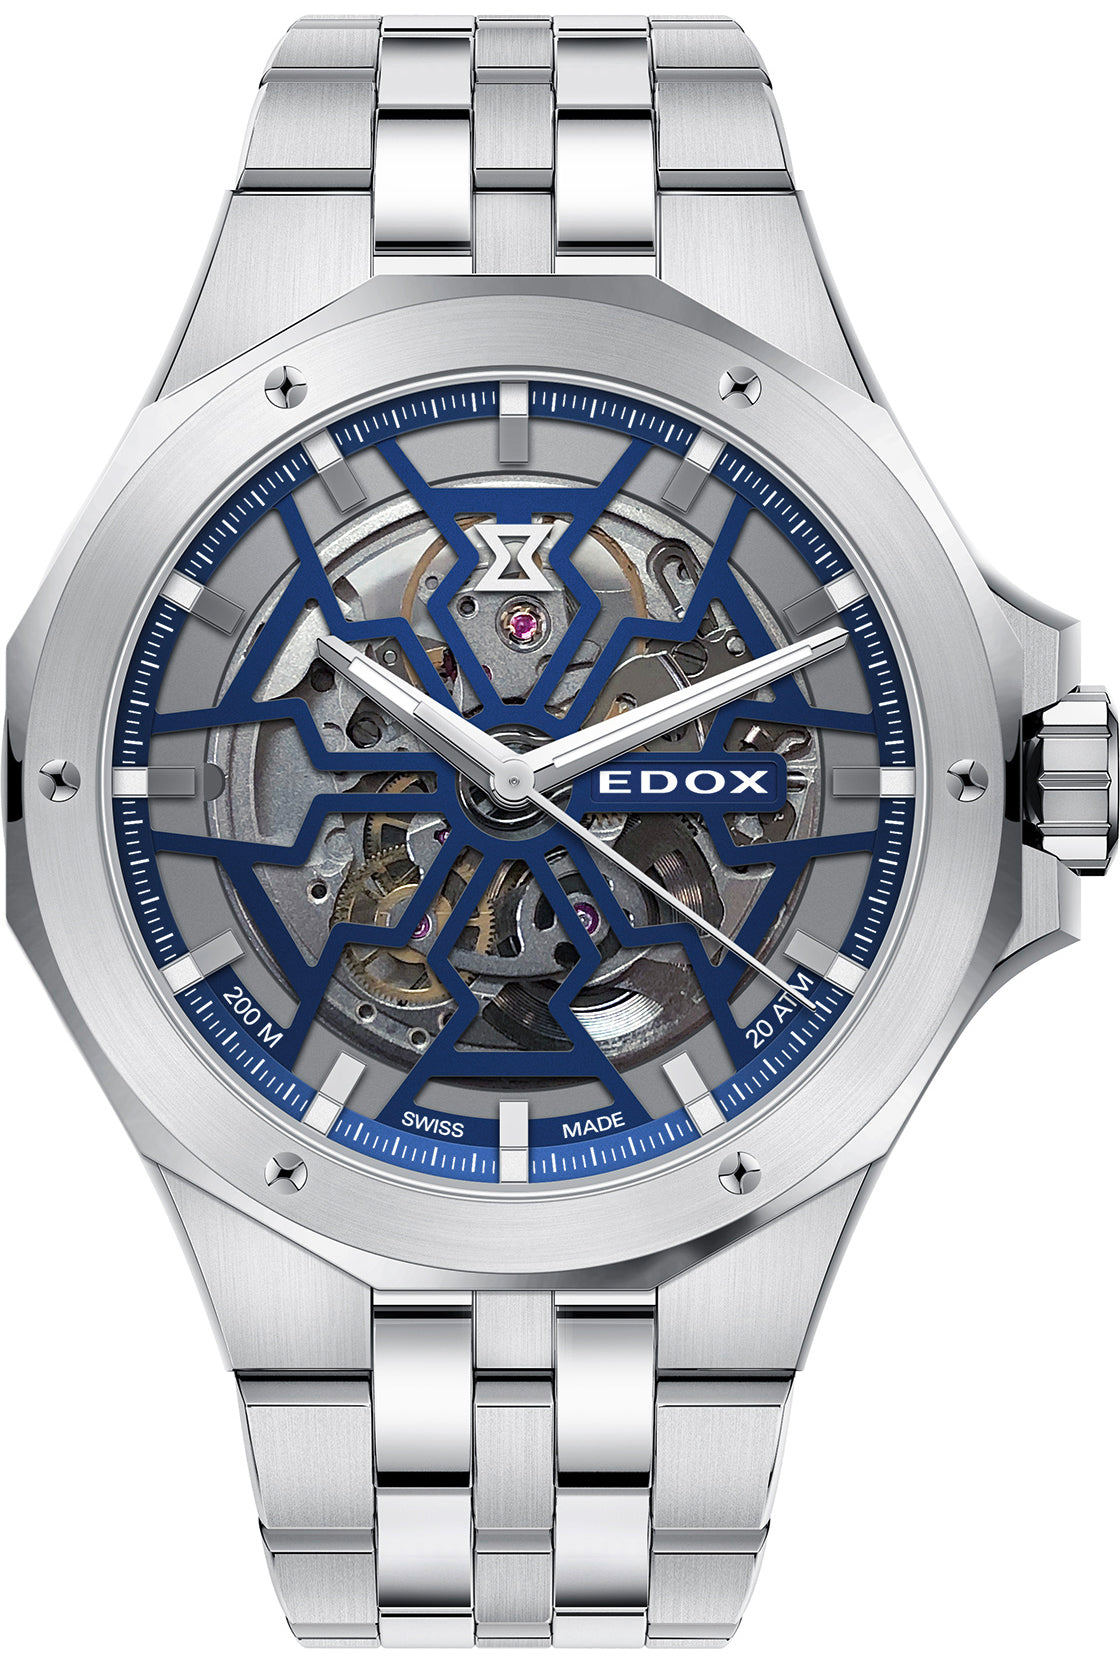 Photos - Wrist Watch EDOX Watch Delfin Mecano 3 Hands Skeleton - Silver EDX-051 